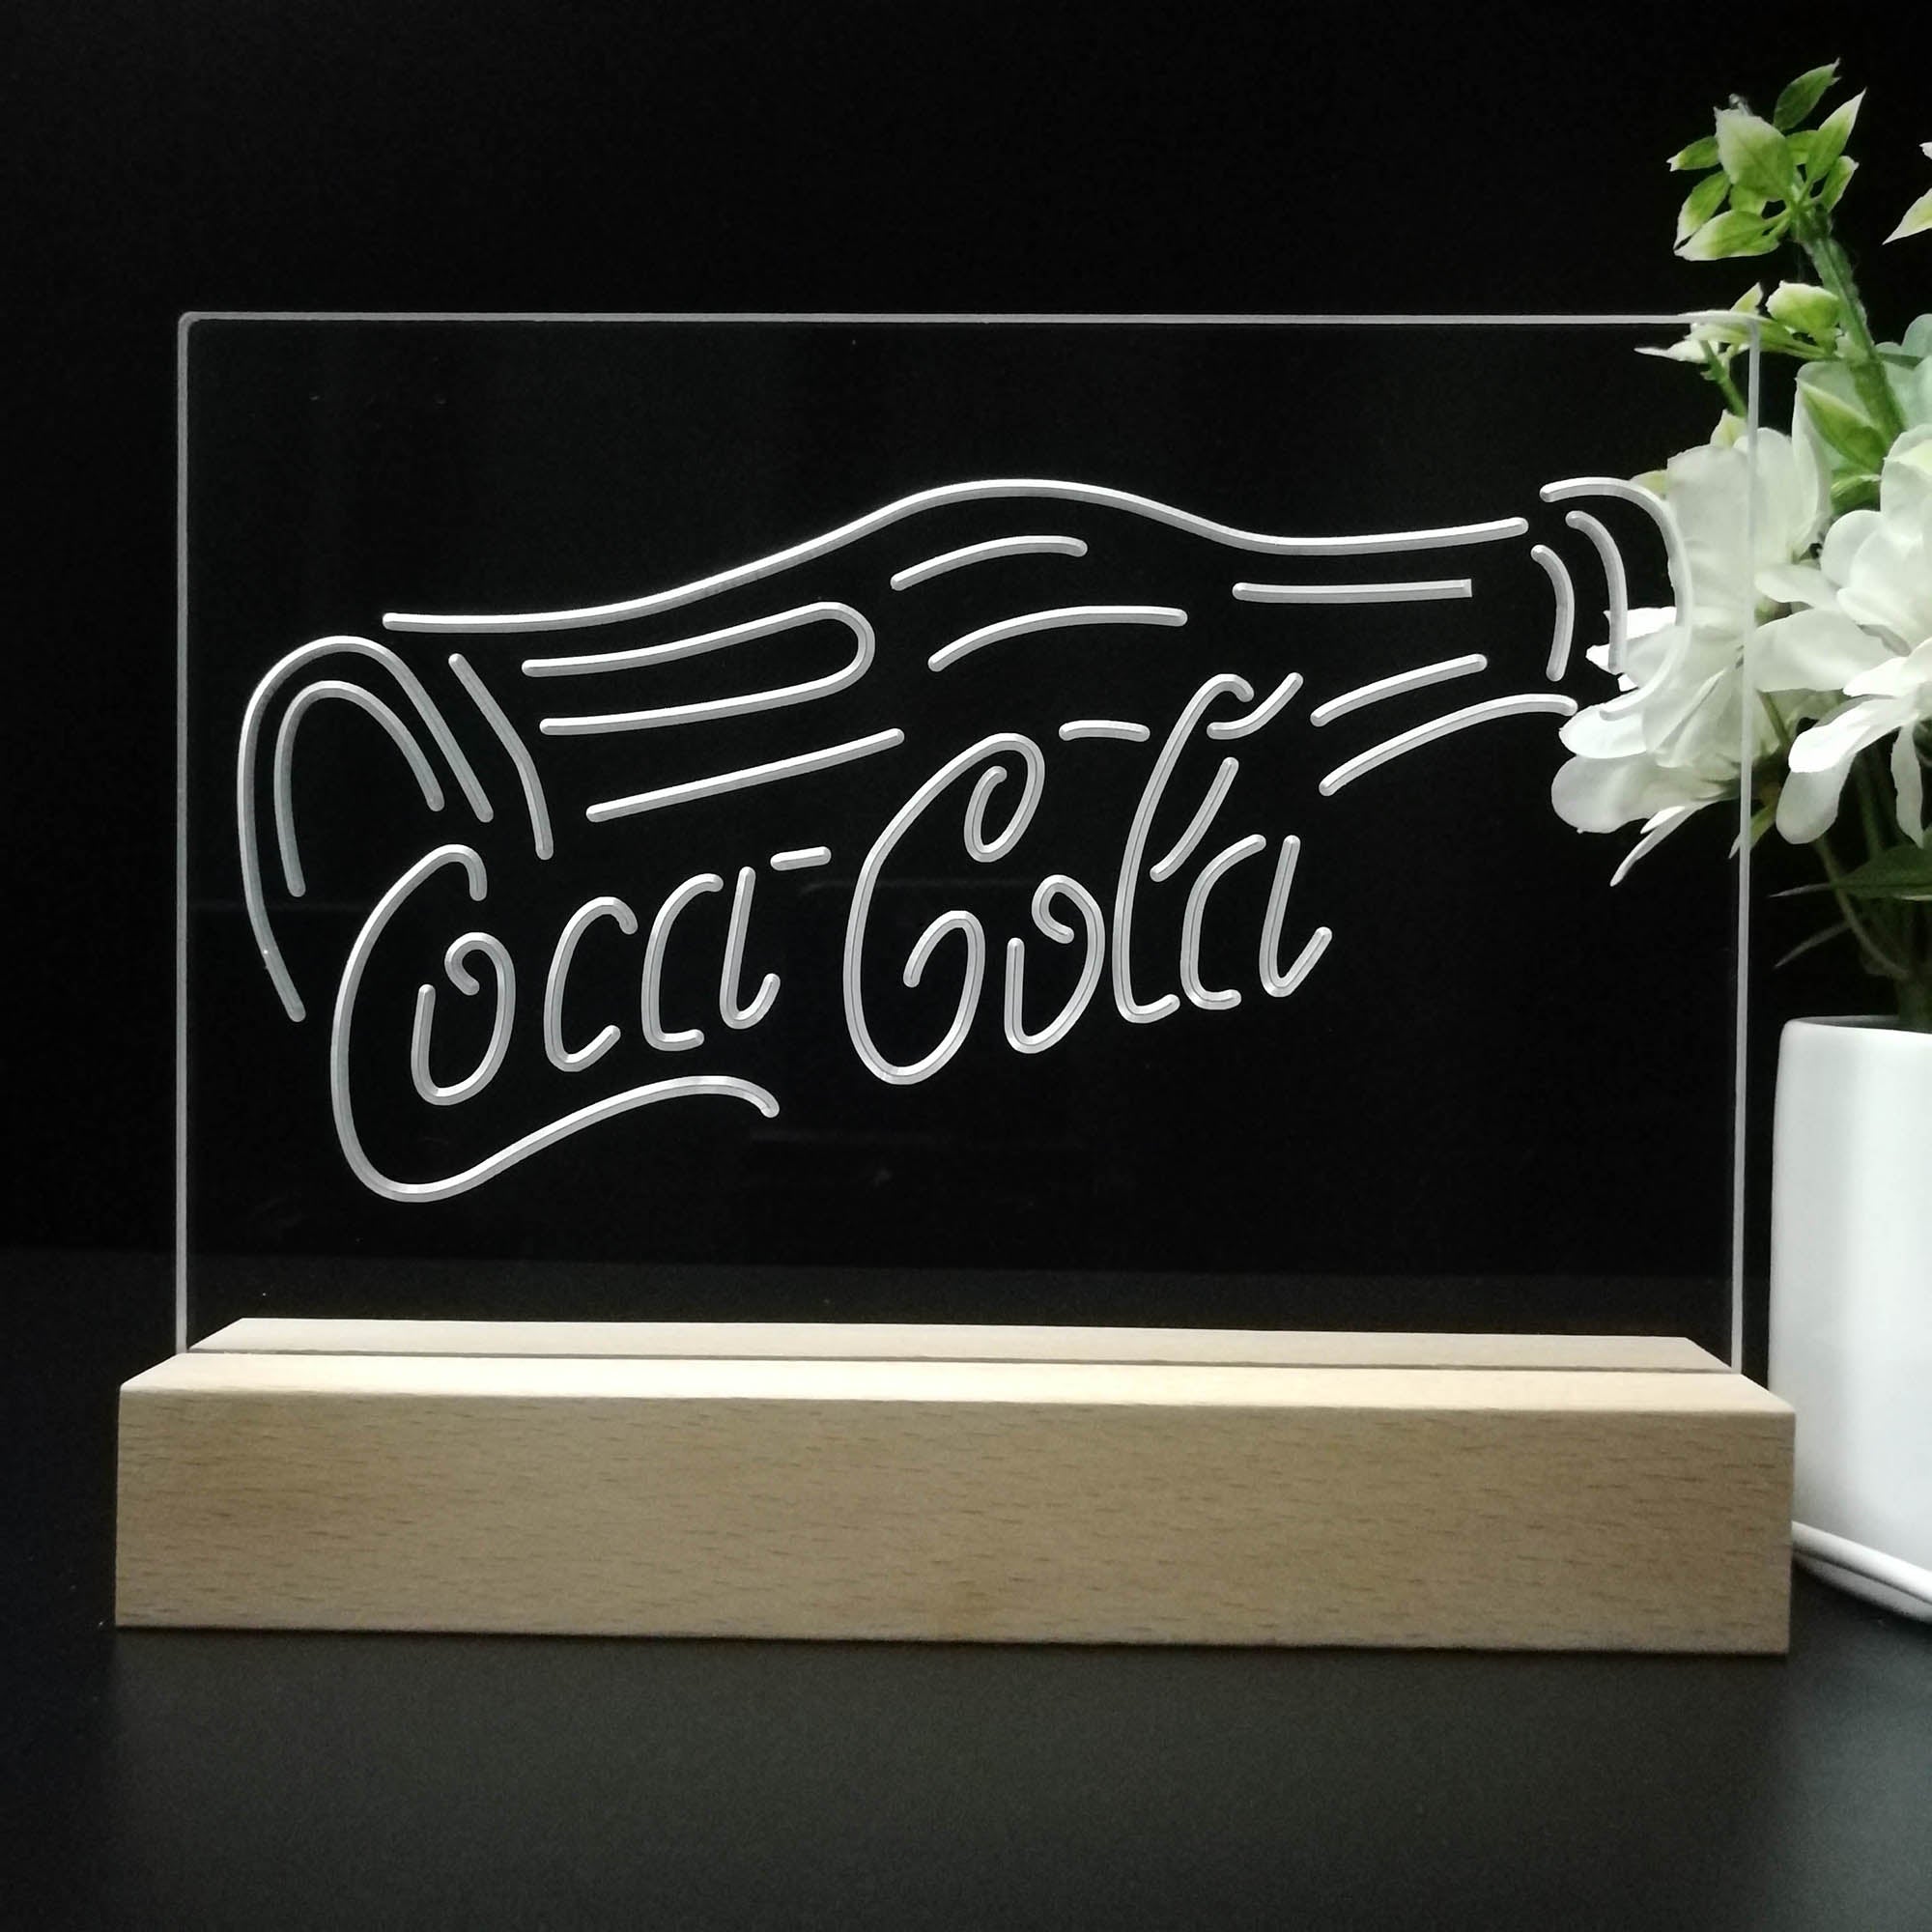 Coca Cola Bottle Drink Bar Neon Sign Pub Bar Lamp